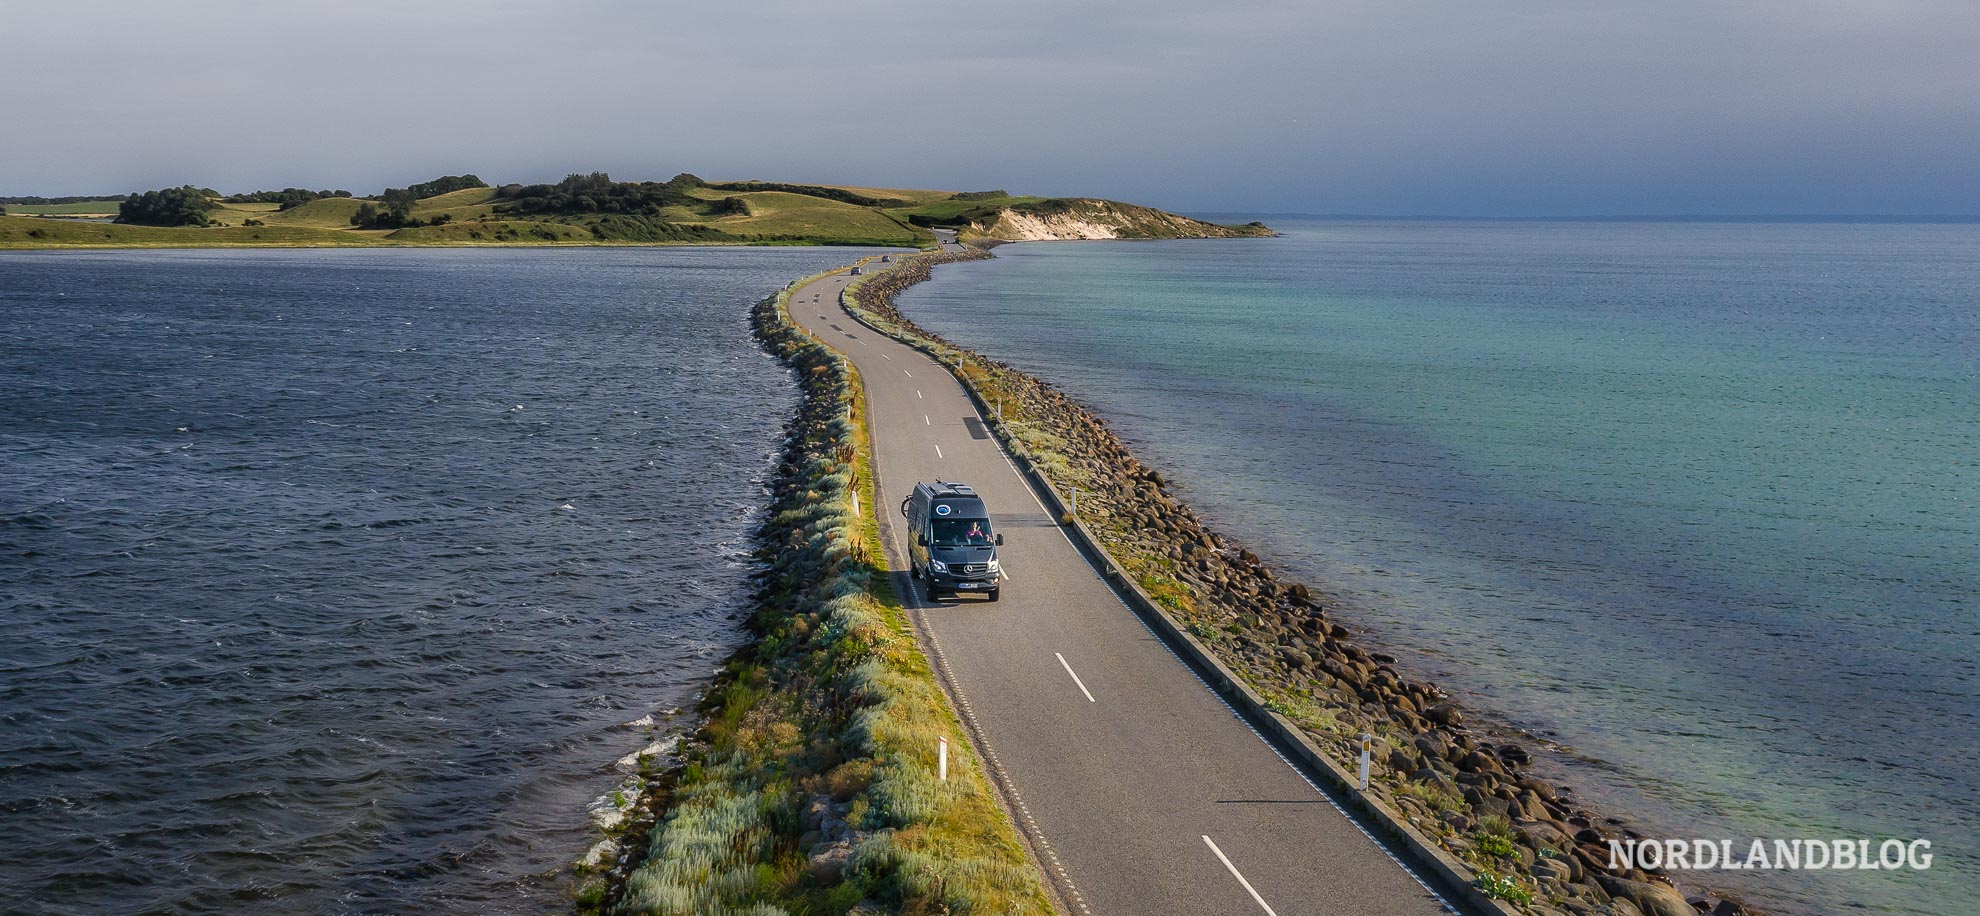 Camping Dänemark Roadtrip mit Kastenwagen Wohnmobil Insel Fyn